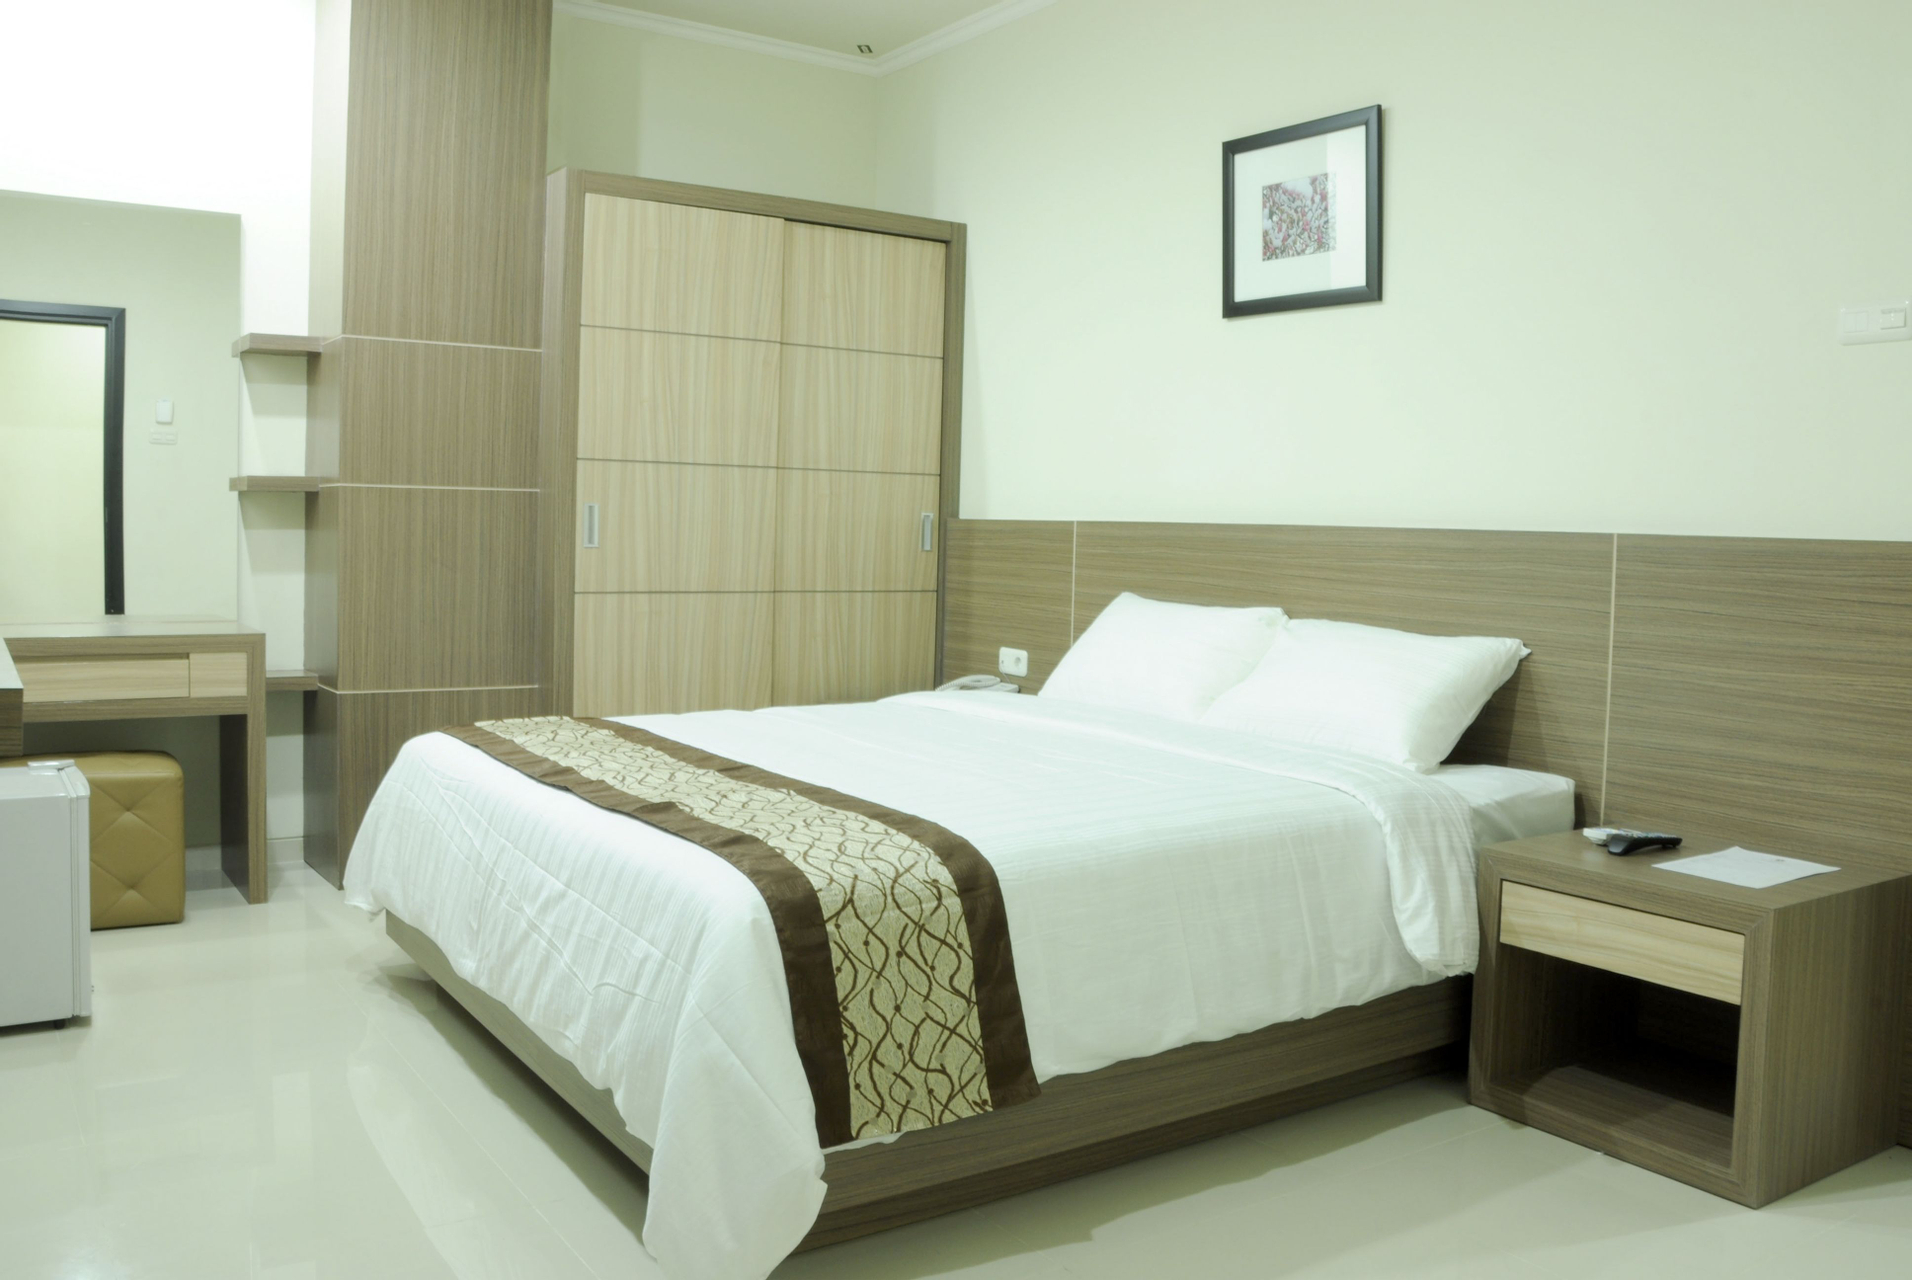 Bedroom 3, Maumu Hotel and Lounge, Surabaya